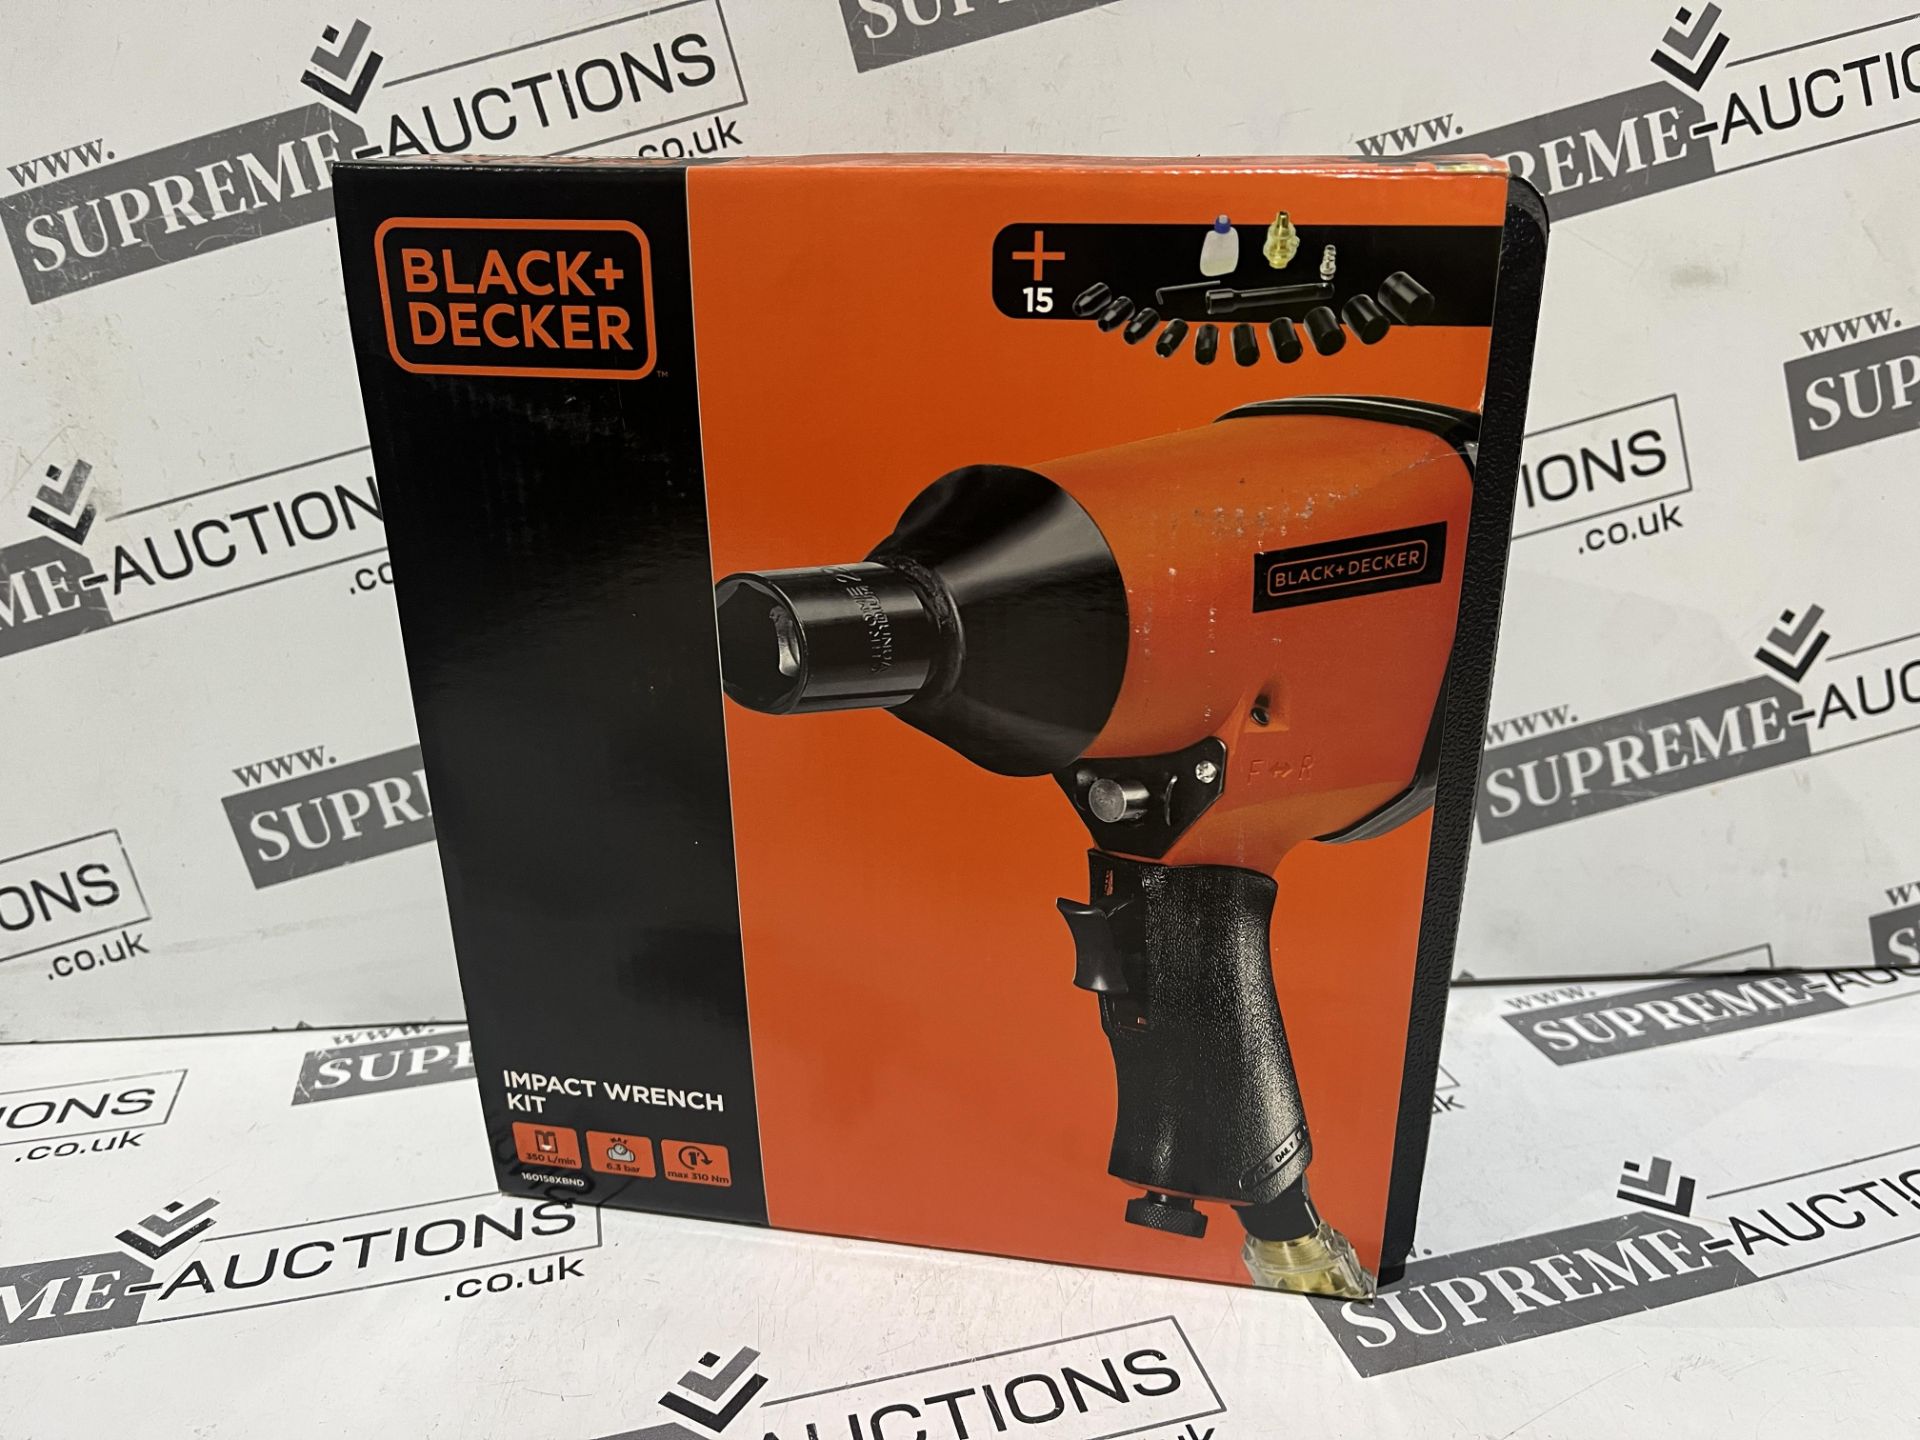 2 X Brand New Black & Decker Impact Wrench Kit, • 1/2 inch Impact wrench • 10 Impact Sockets (9,10, - Image 4 of 4